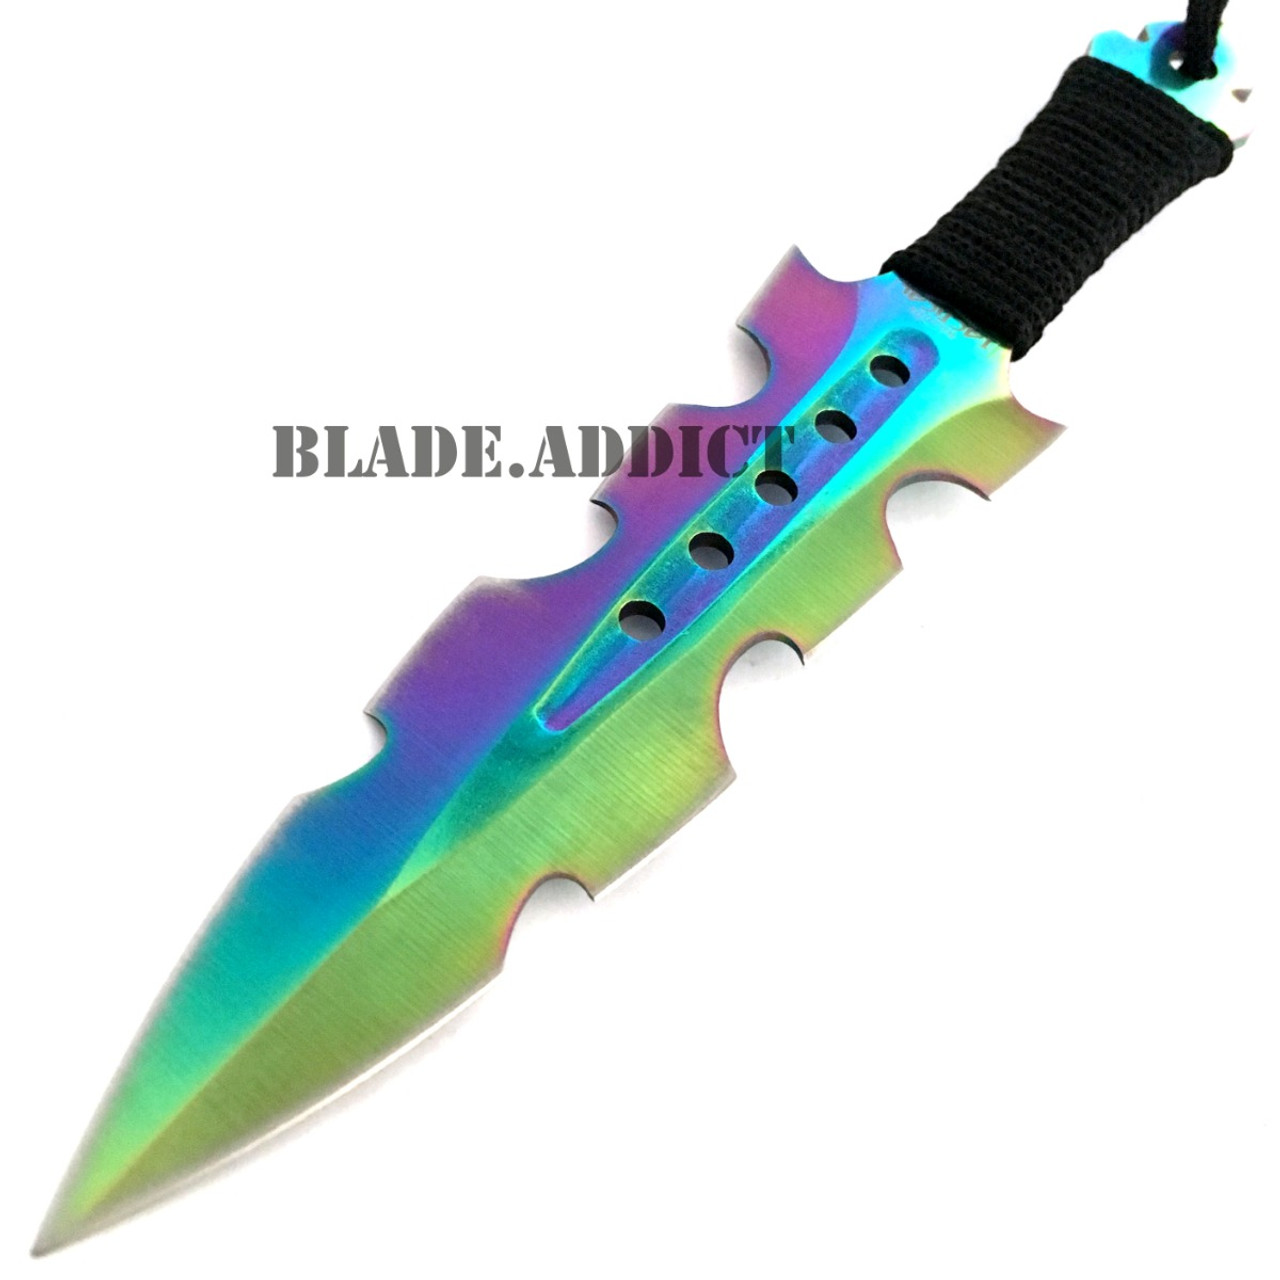 Trading ew scythe ew rev and Icewing for Rainbow knife and Rainbow